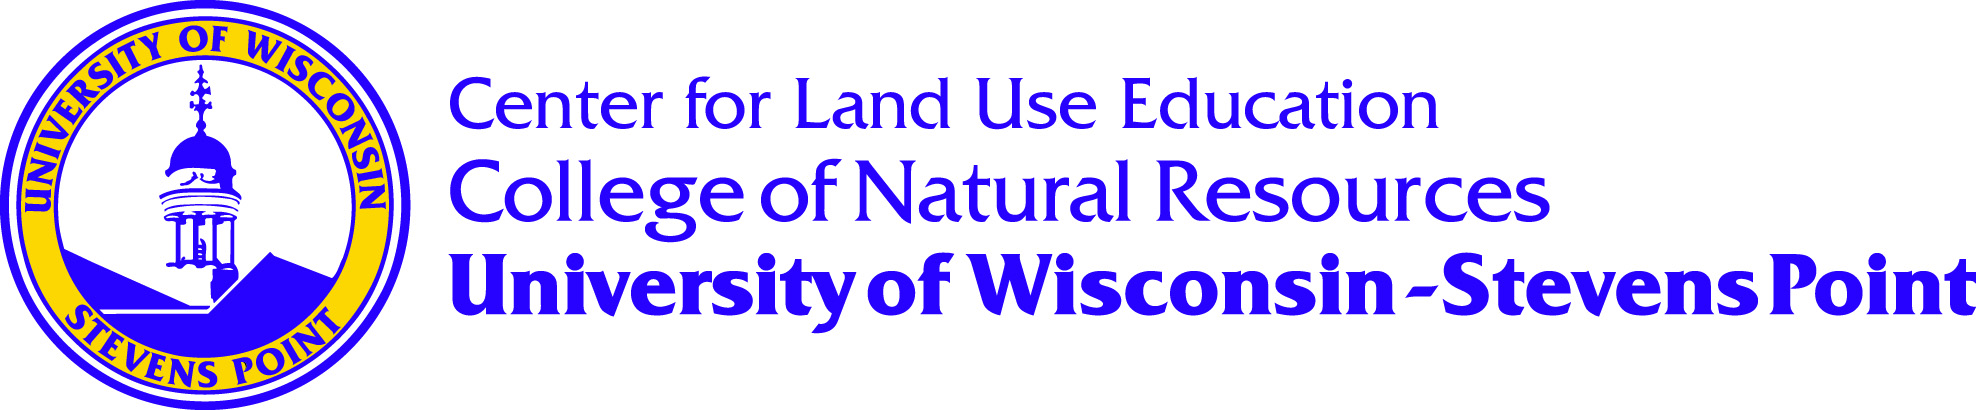 Center for Land Use Education Brand Extension - Horizontal (Jan 2013) - Copy.jpg